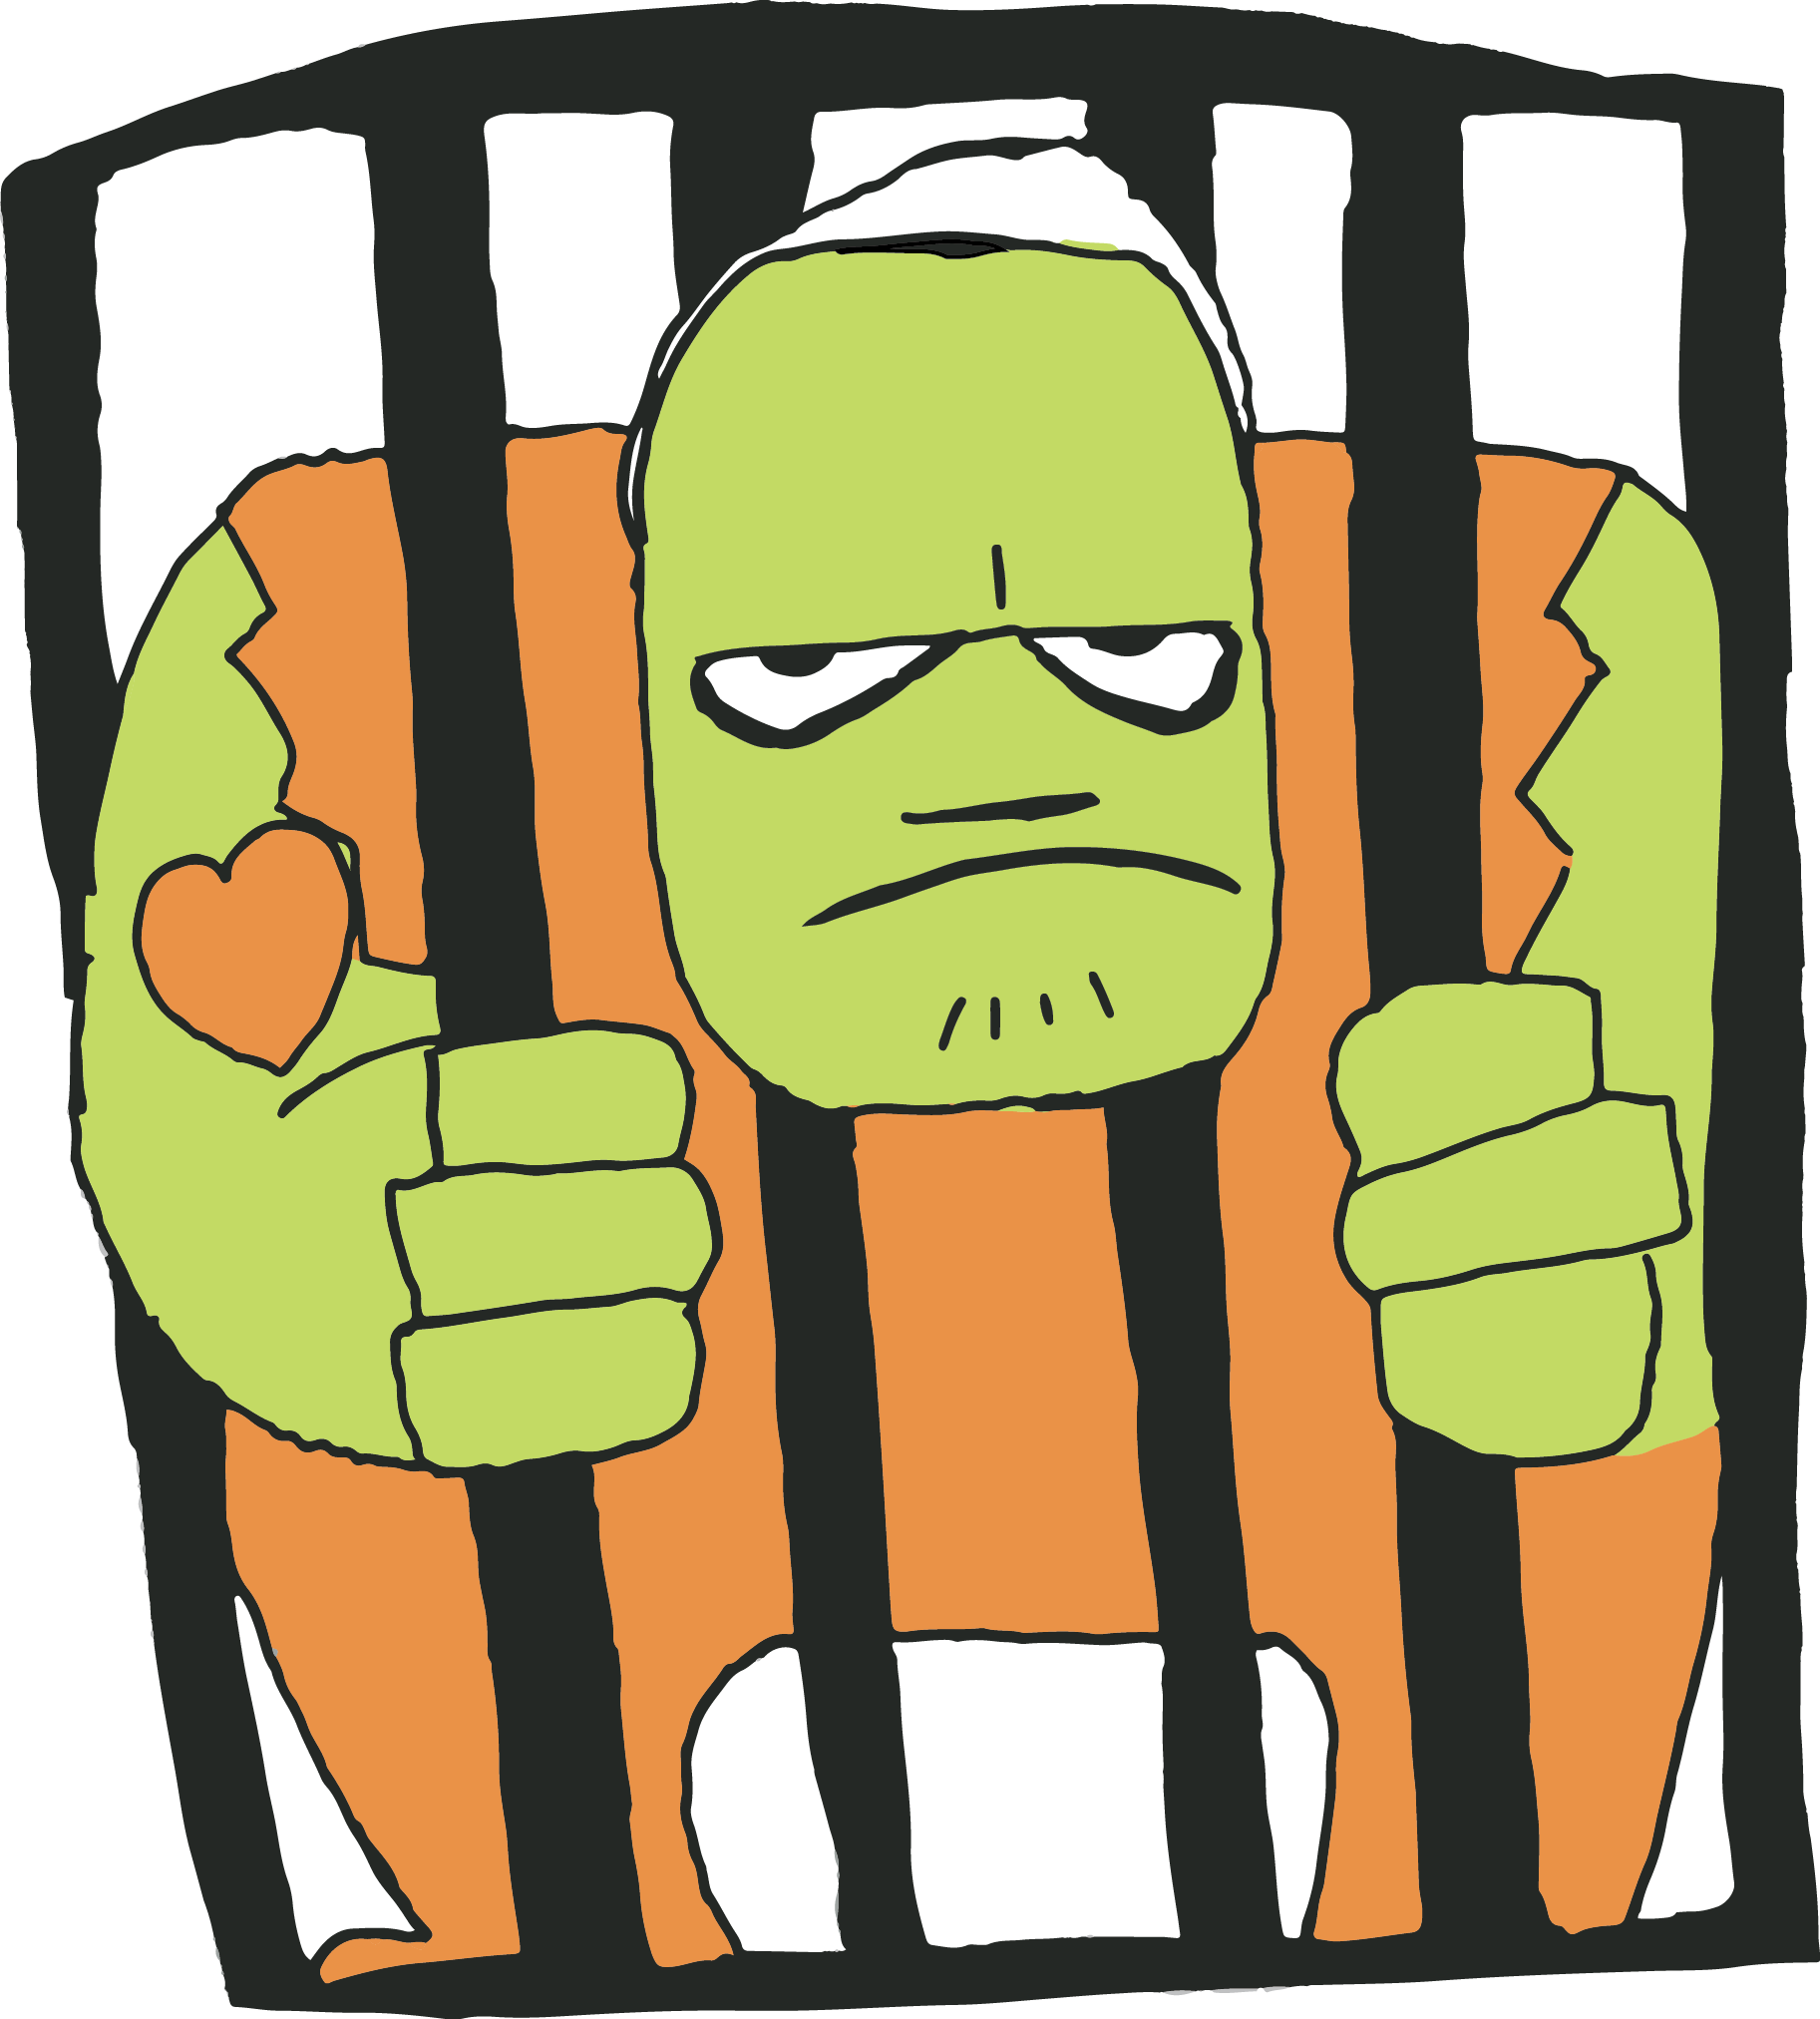 Mean looking prisoner, akin to Frankenstein's Monster, grasps the jail bars, dressed in orange.